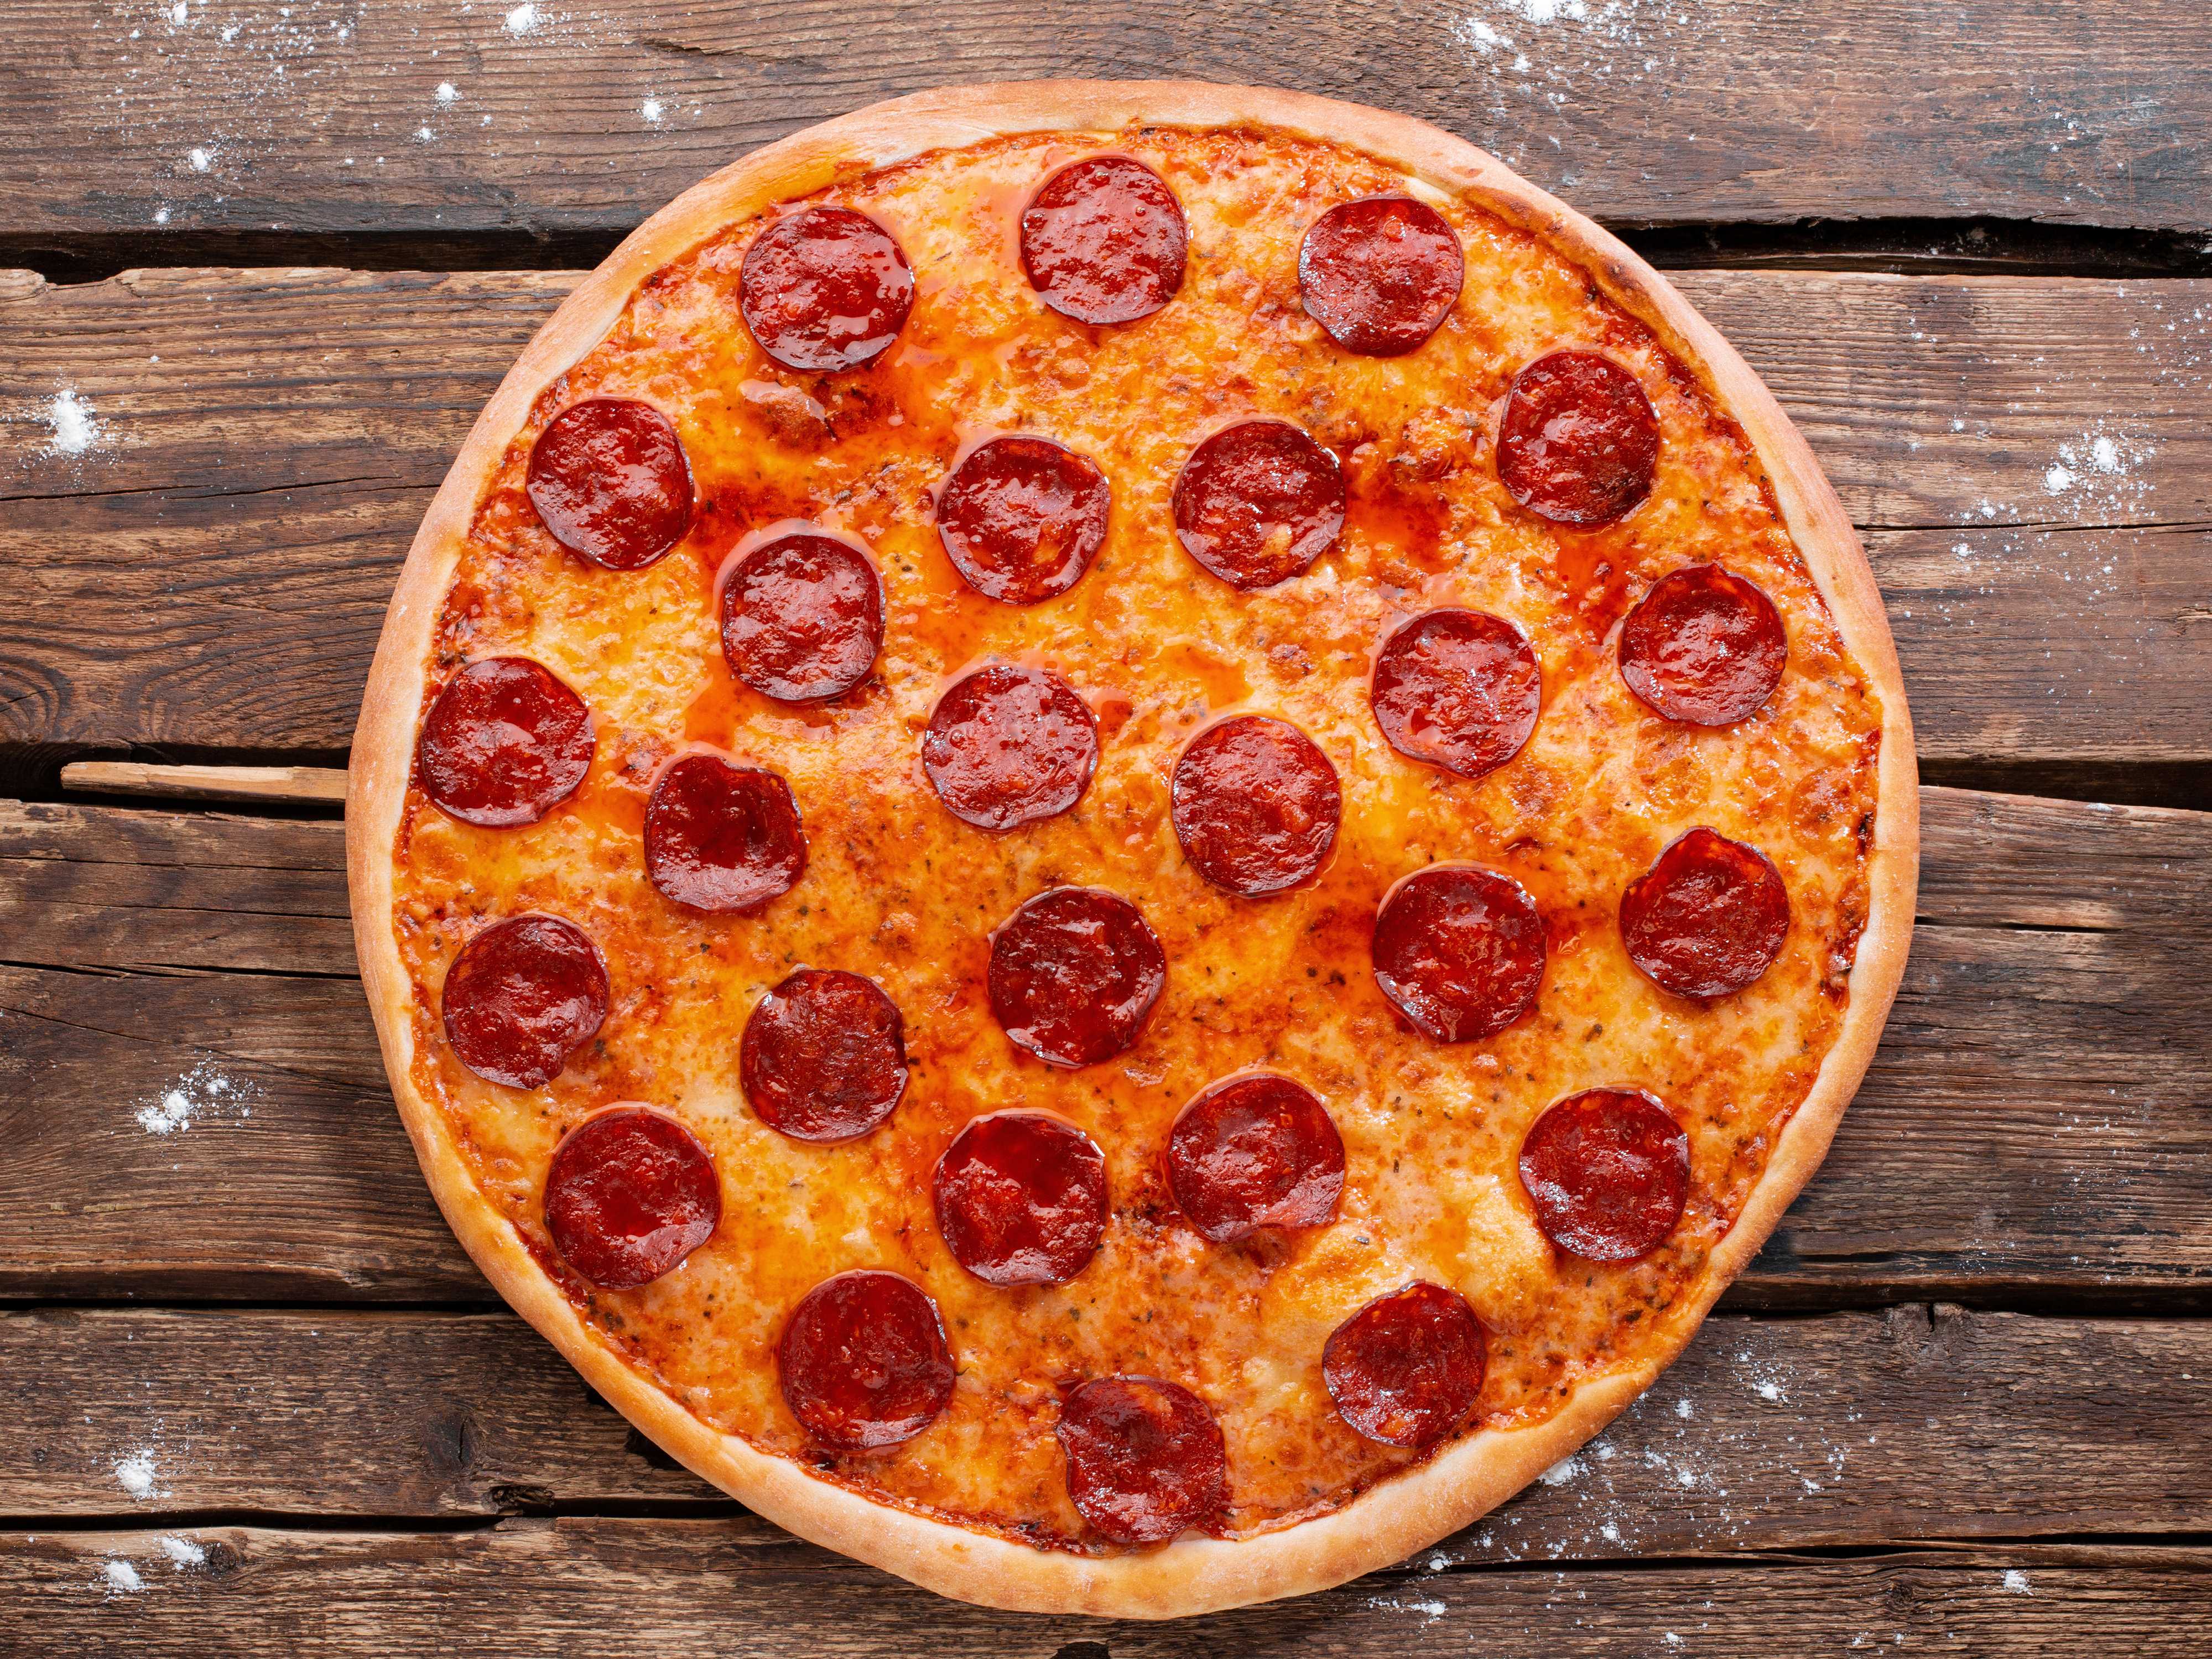 сколько стоит пицца пепперони в среднем фото 48